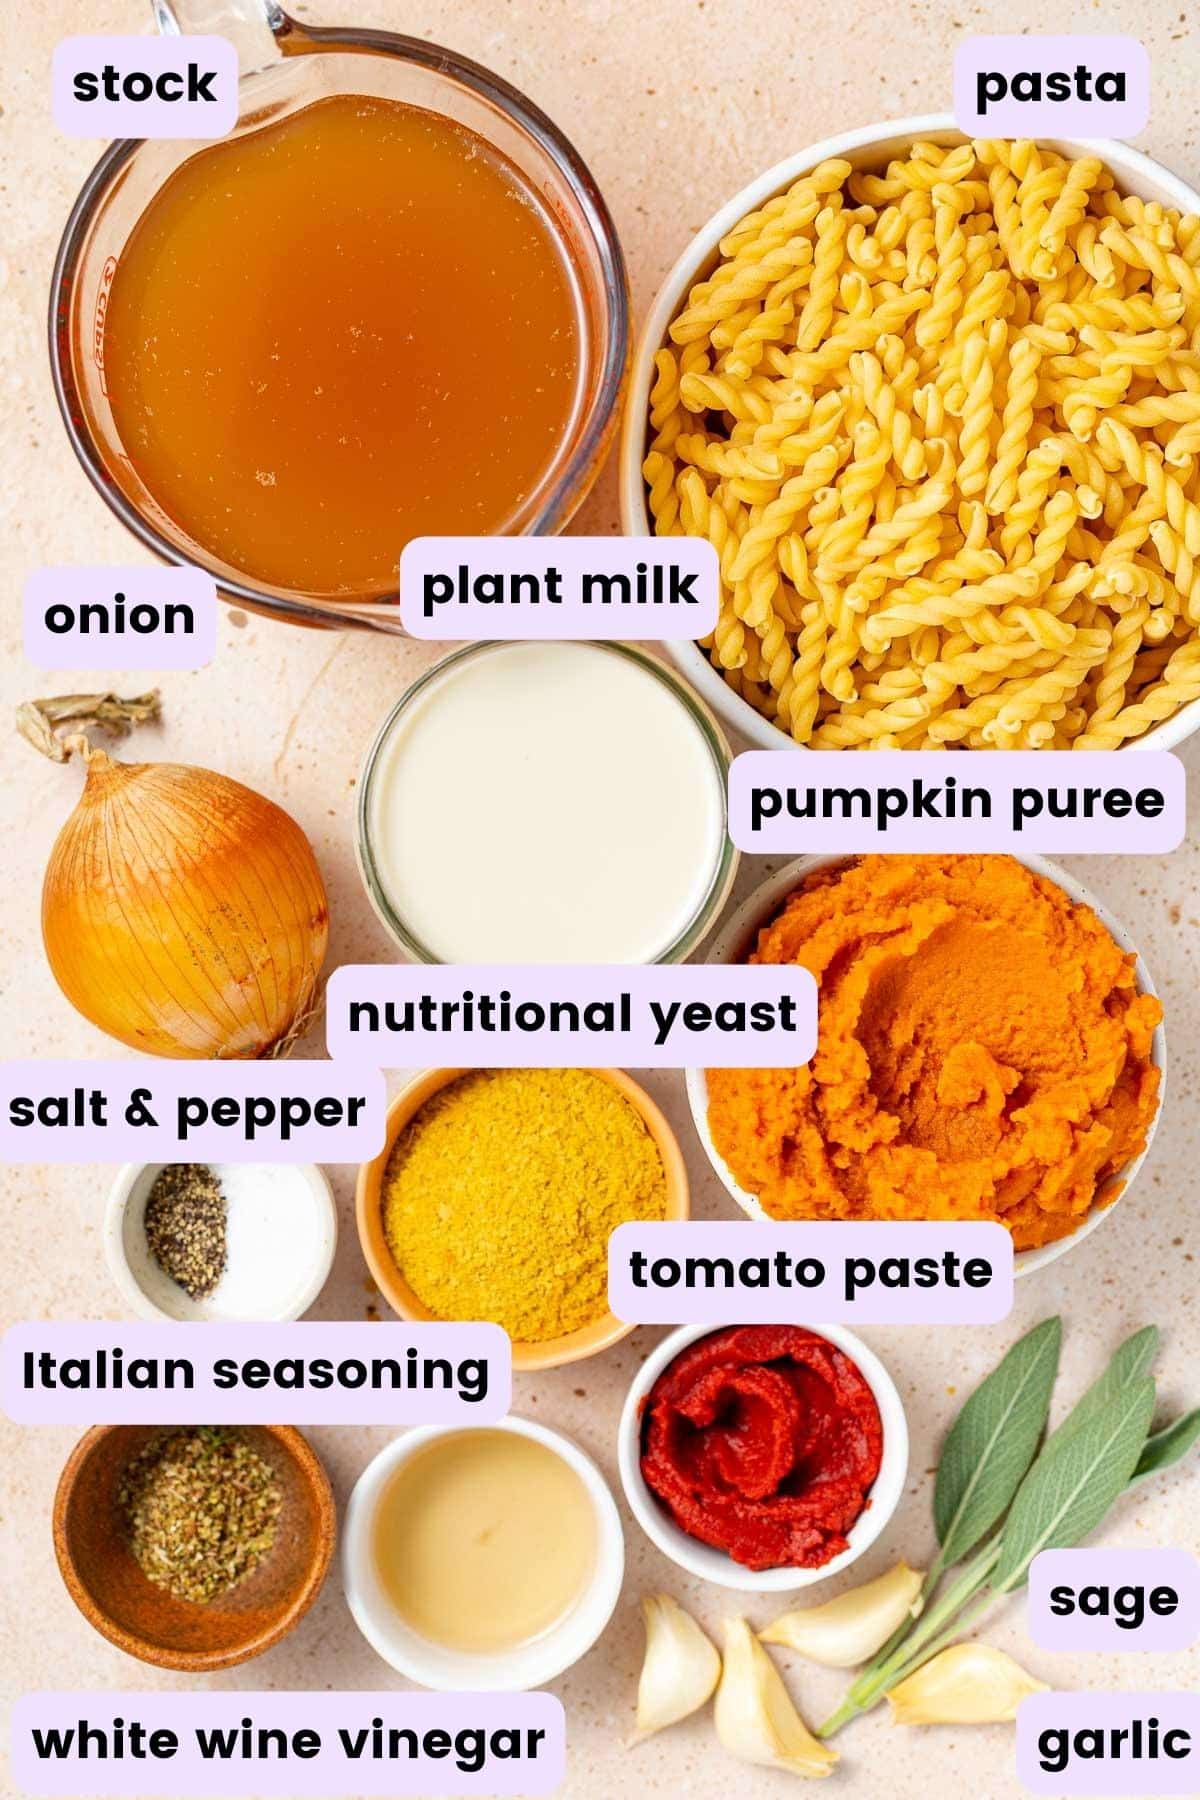 ingredients needed to make vegan pumpkin pasta as per the written ingredients list